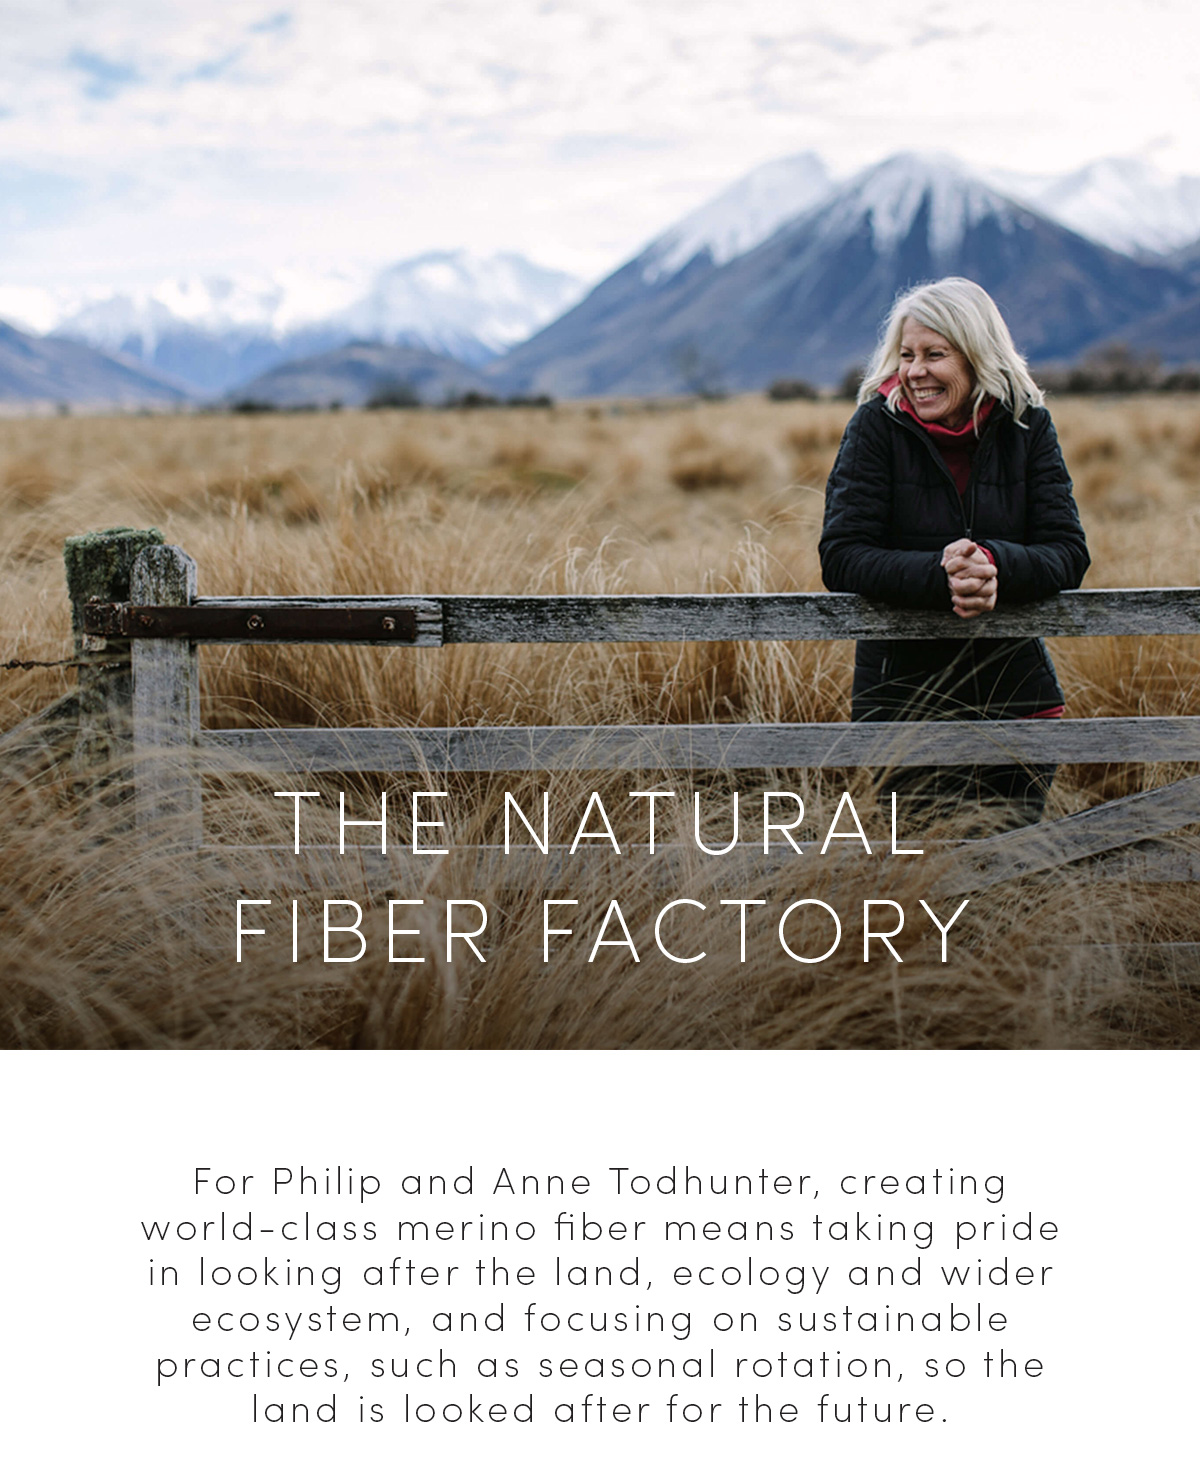 The natural fiber factory